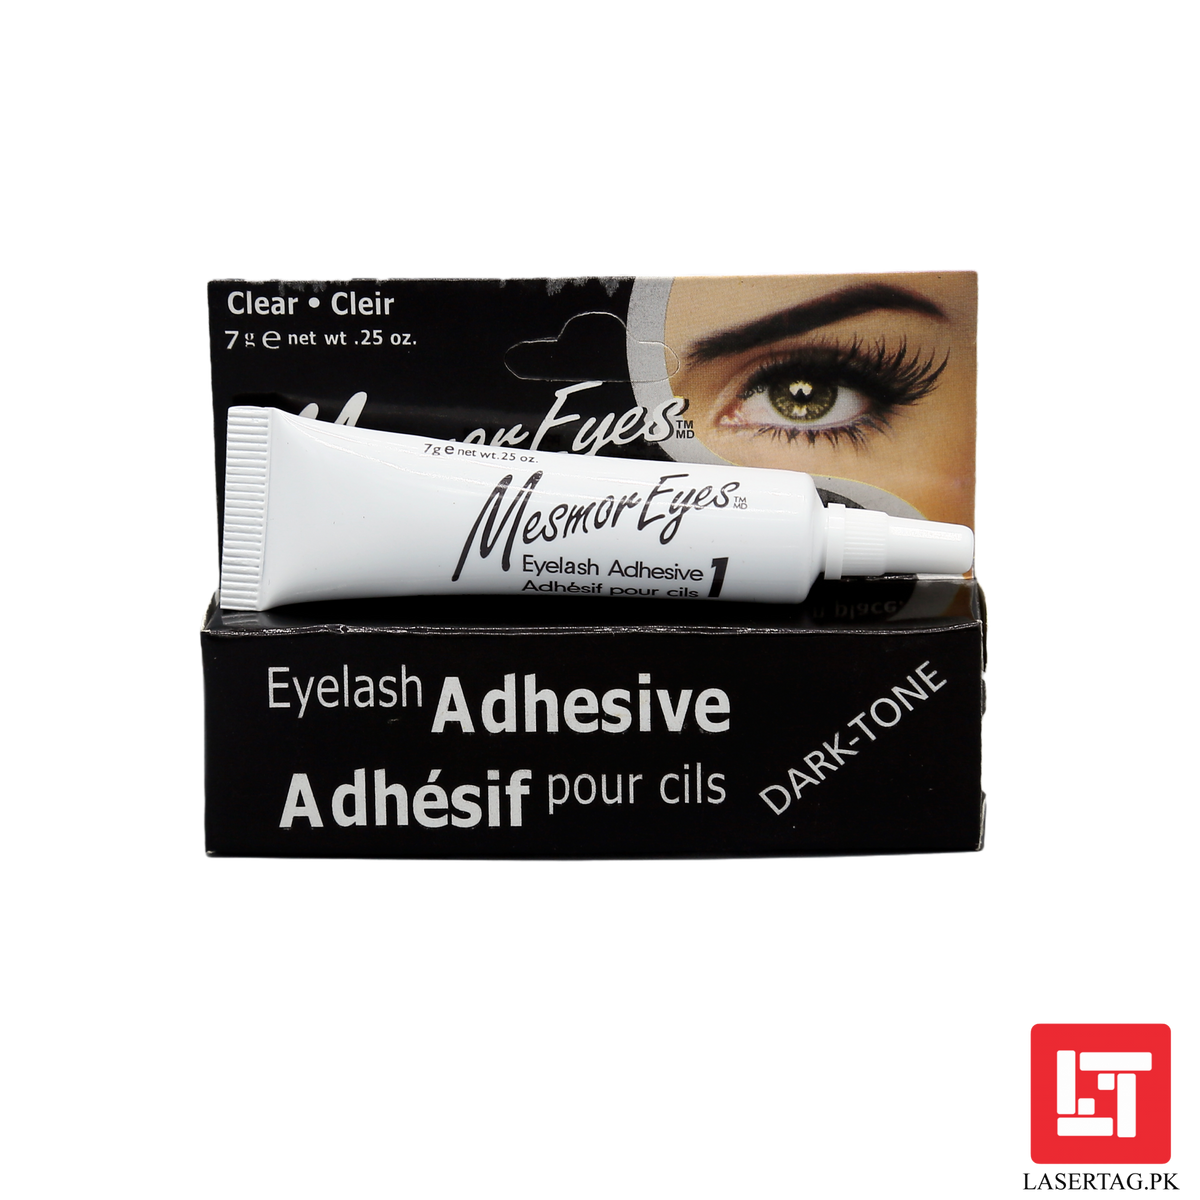 Mesmor Eyes Adhesive Eyelash Glue 7g freeshipping - lasertag.pk